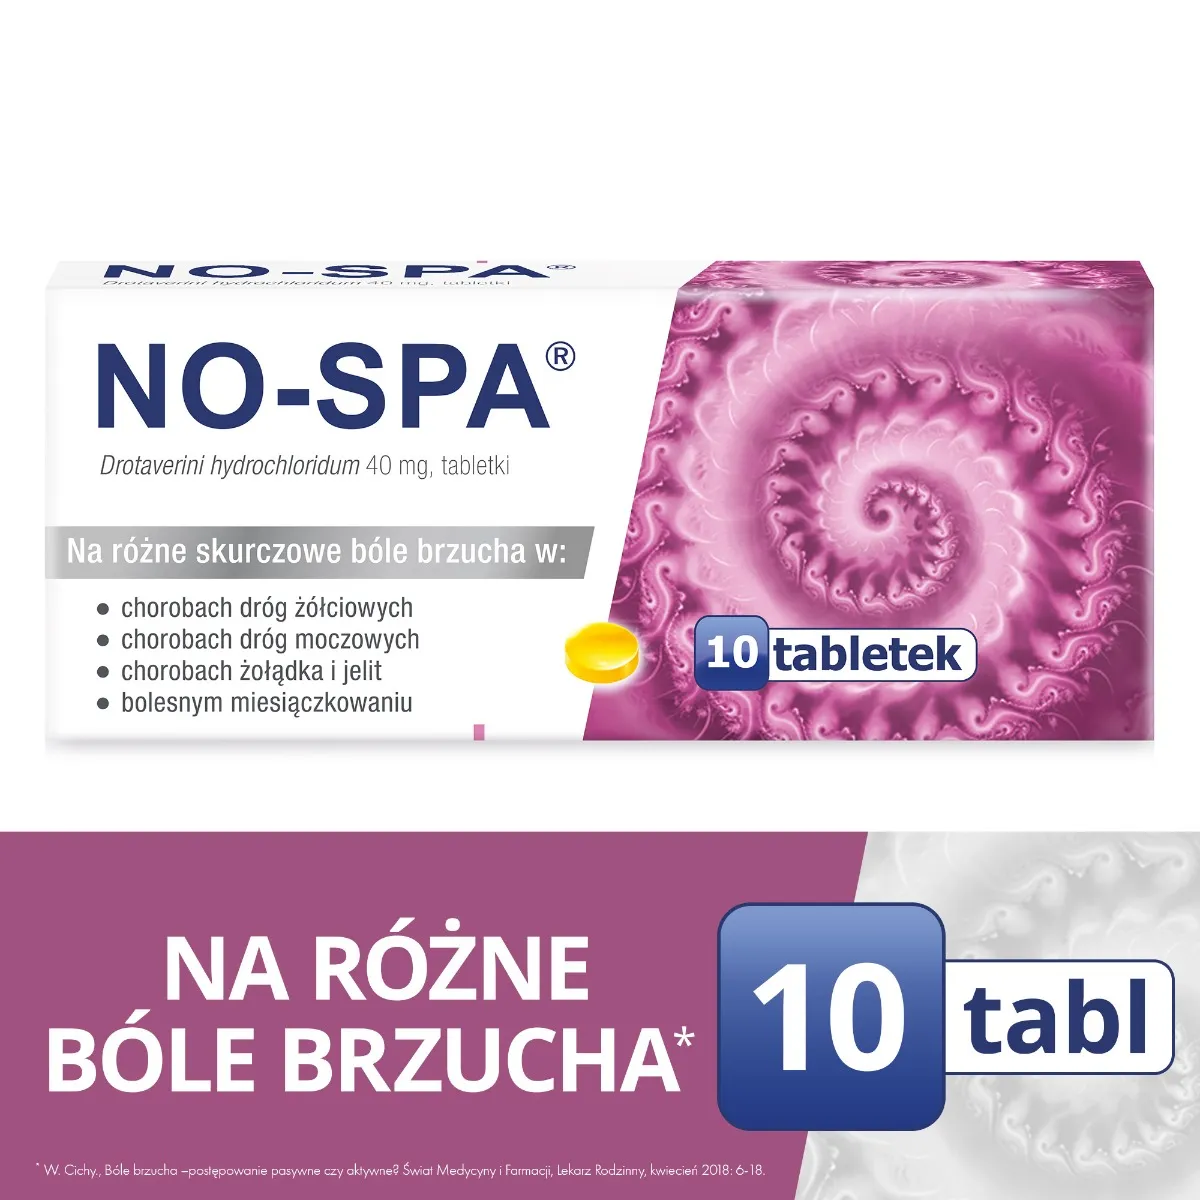 NO-SPA, Drotaverini hydrochloridum 40 mg, 10 tabletek